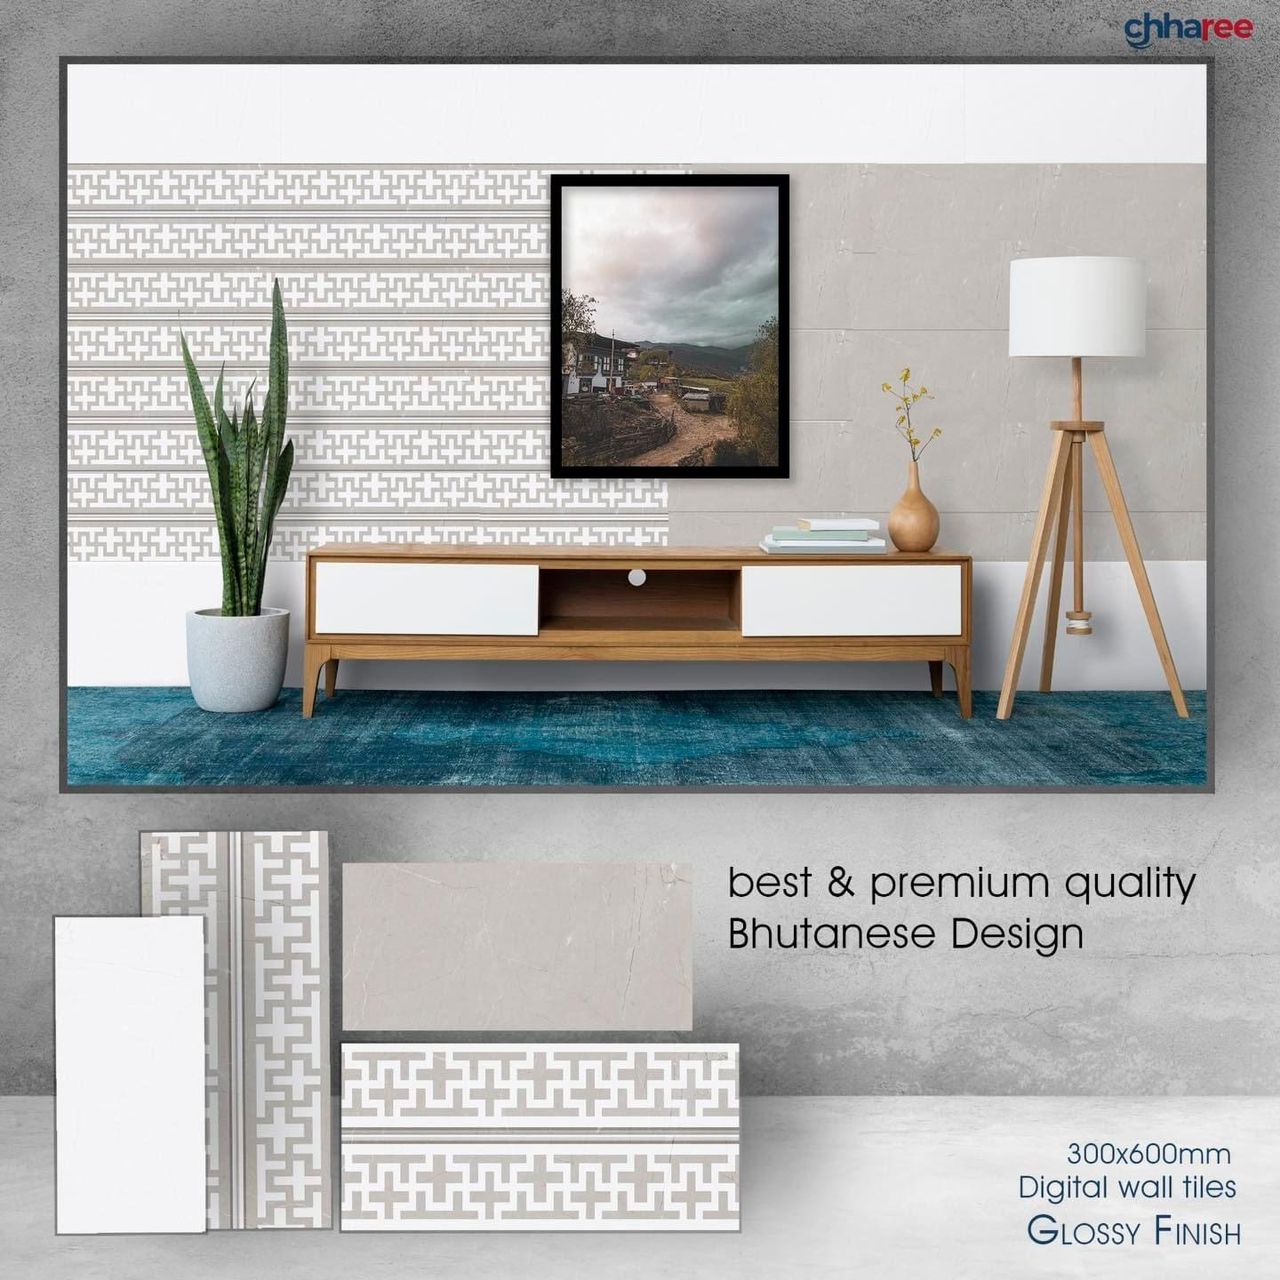 Best & premium quality Bhutanese Design tiles.